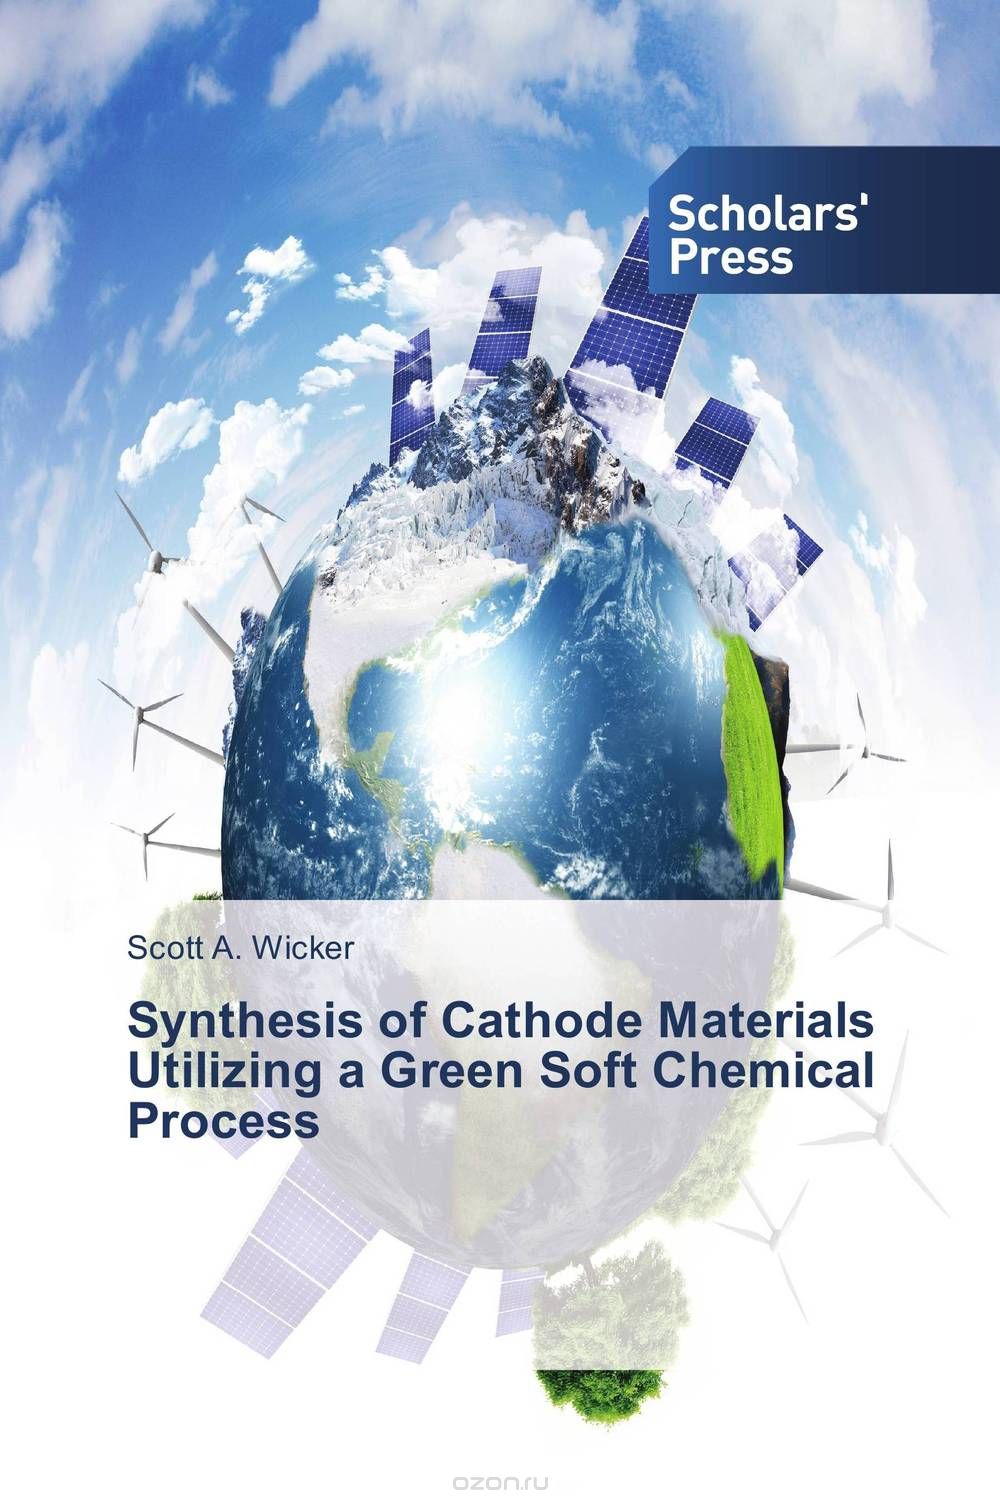 Скачать книгу "Synthesis of Cathode Materials Utilizing a Green Soft Chemical Process"